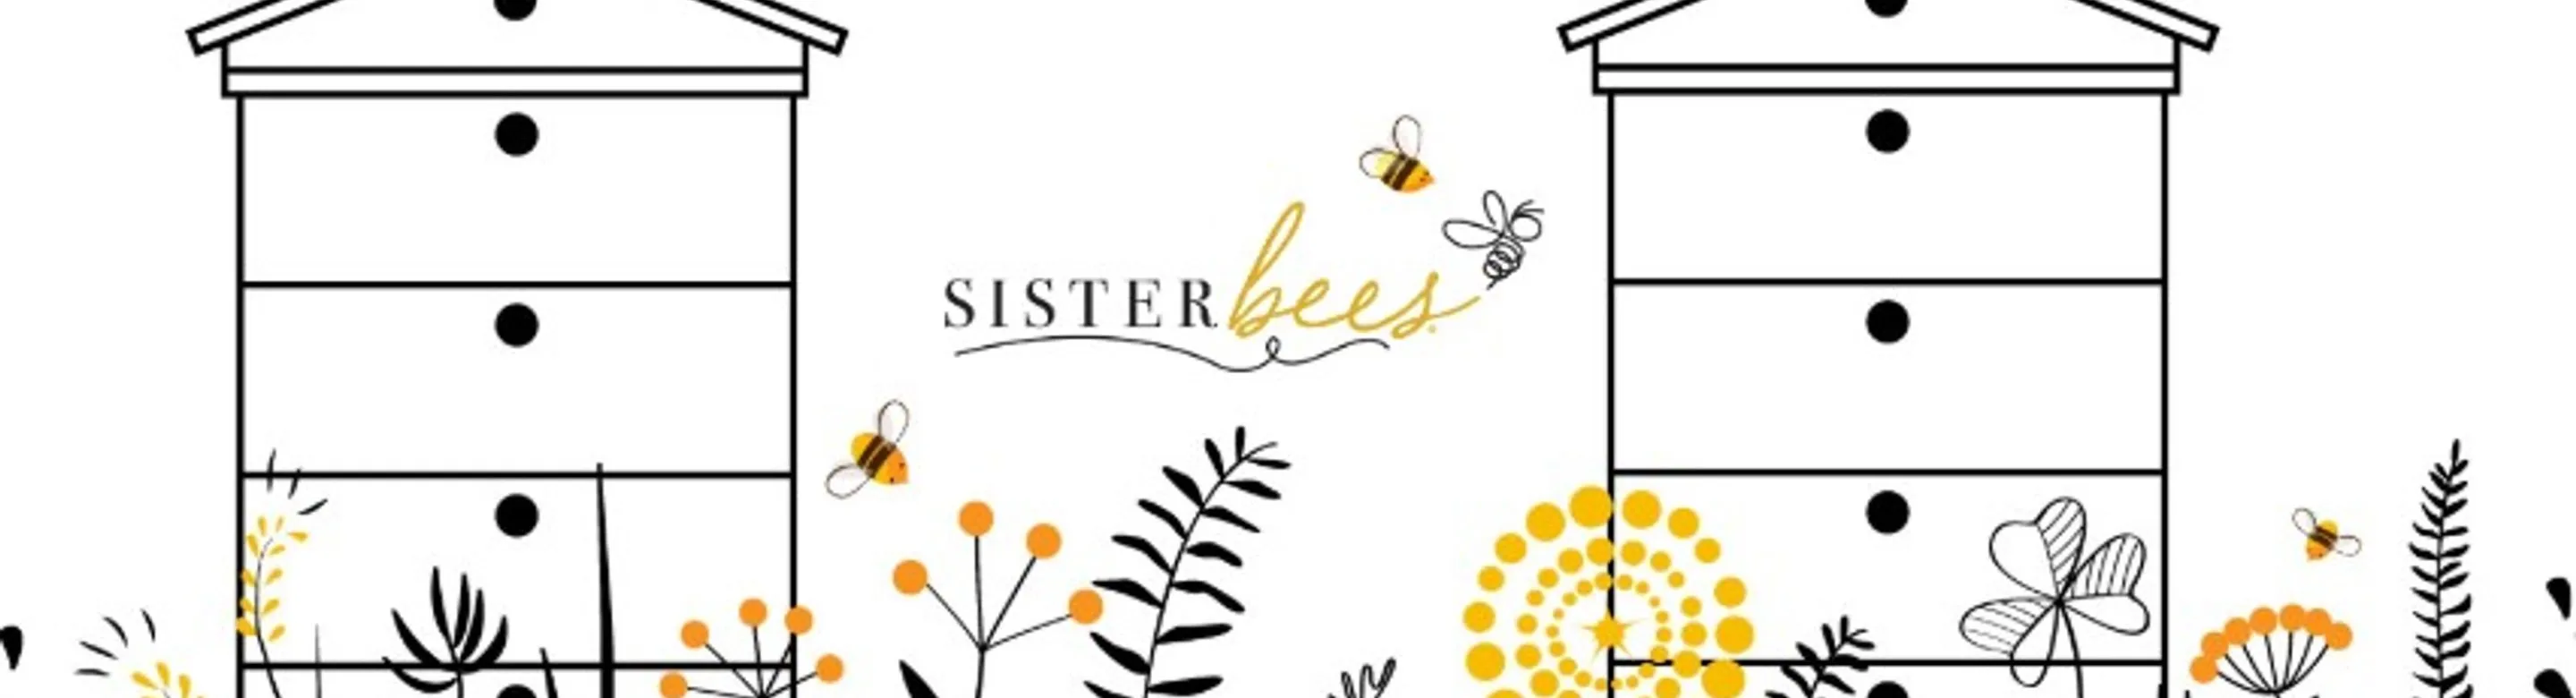 Sister Bees